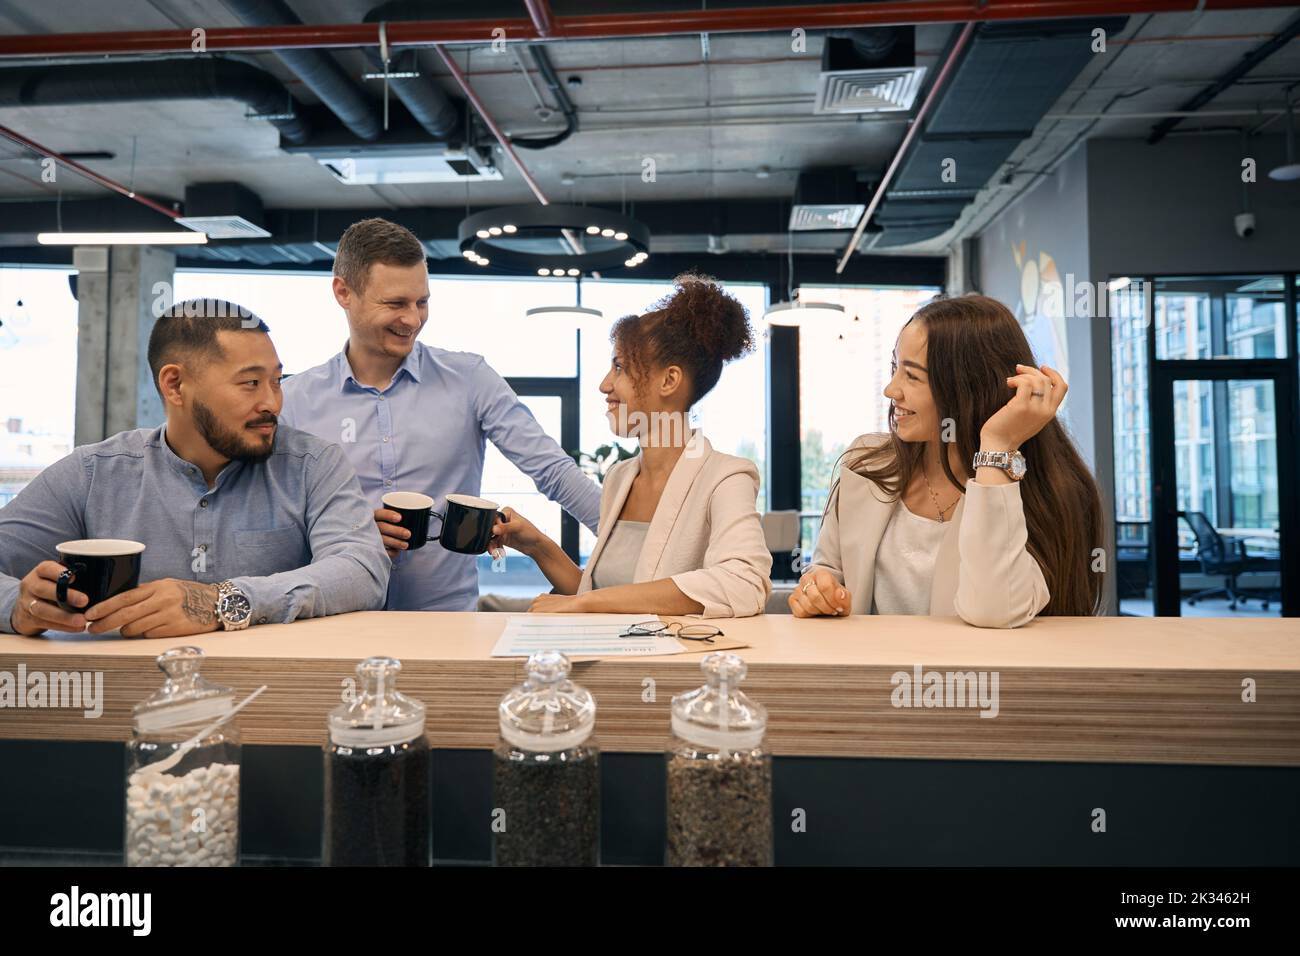 Young company employees enjoying their coffee break Stock Photo